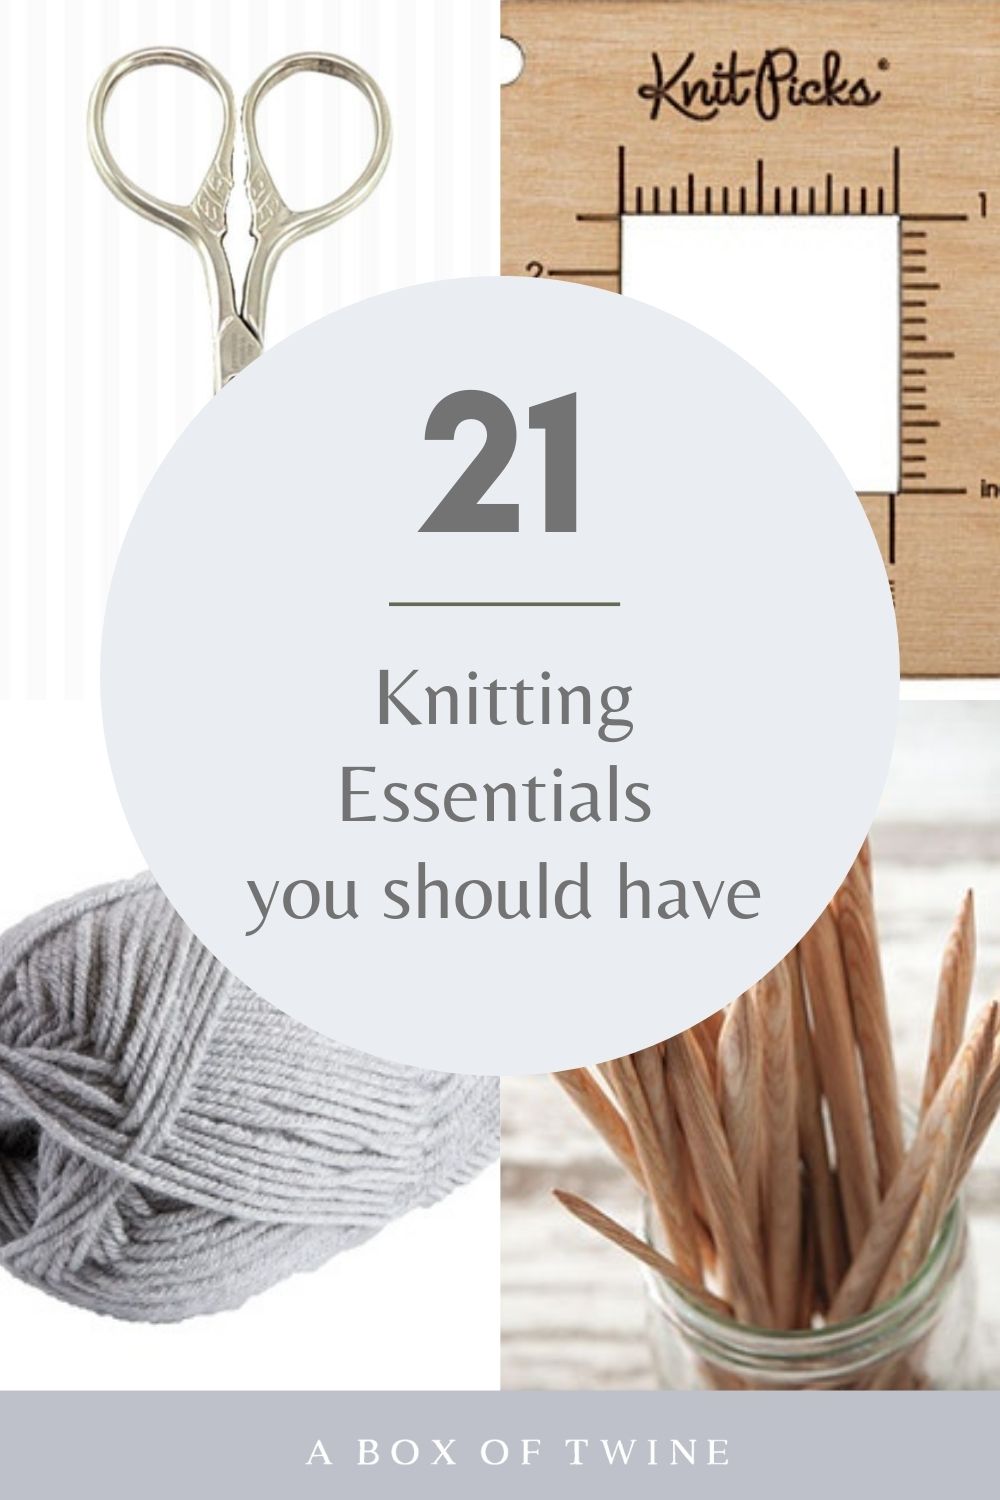 Knitting Kit for Beginners: Tools Every Knitter Needs